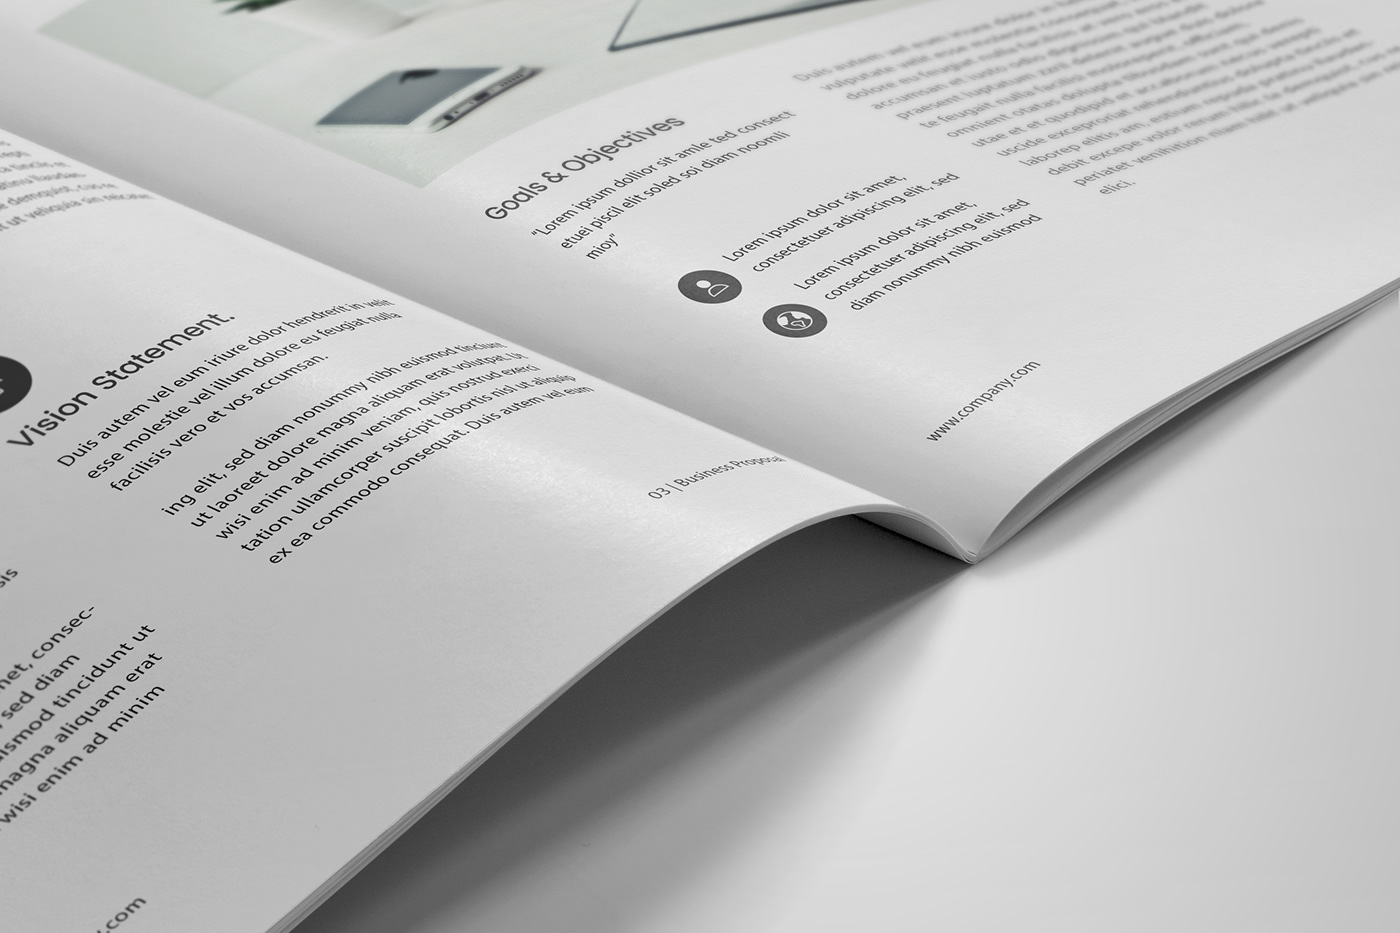 Business Proposal company profile business brochure